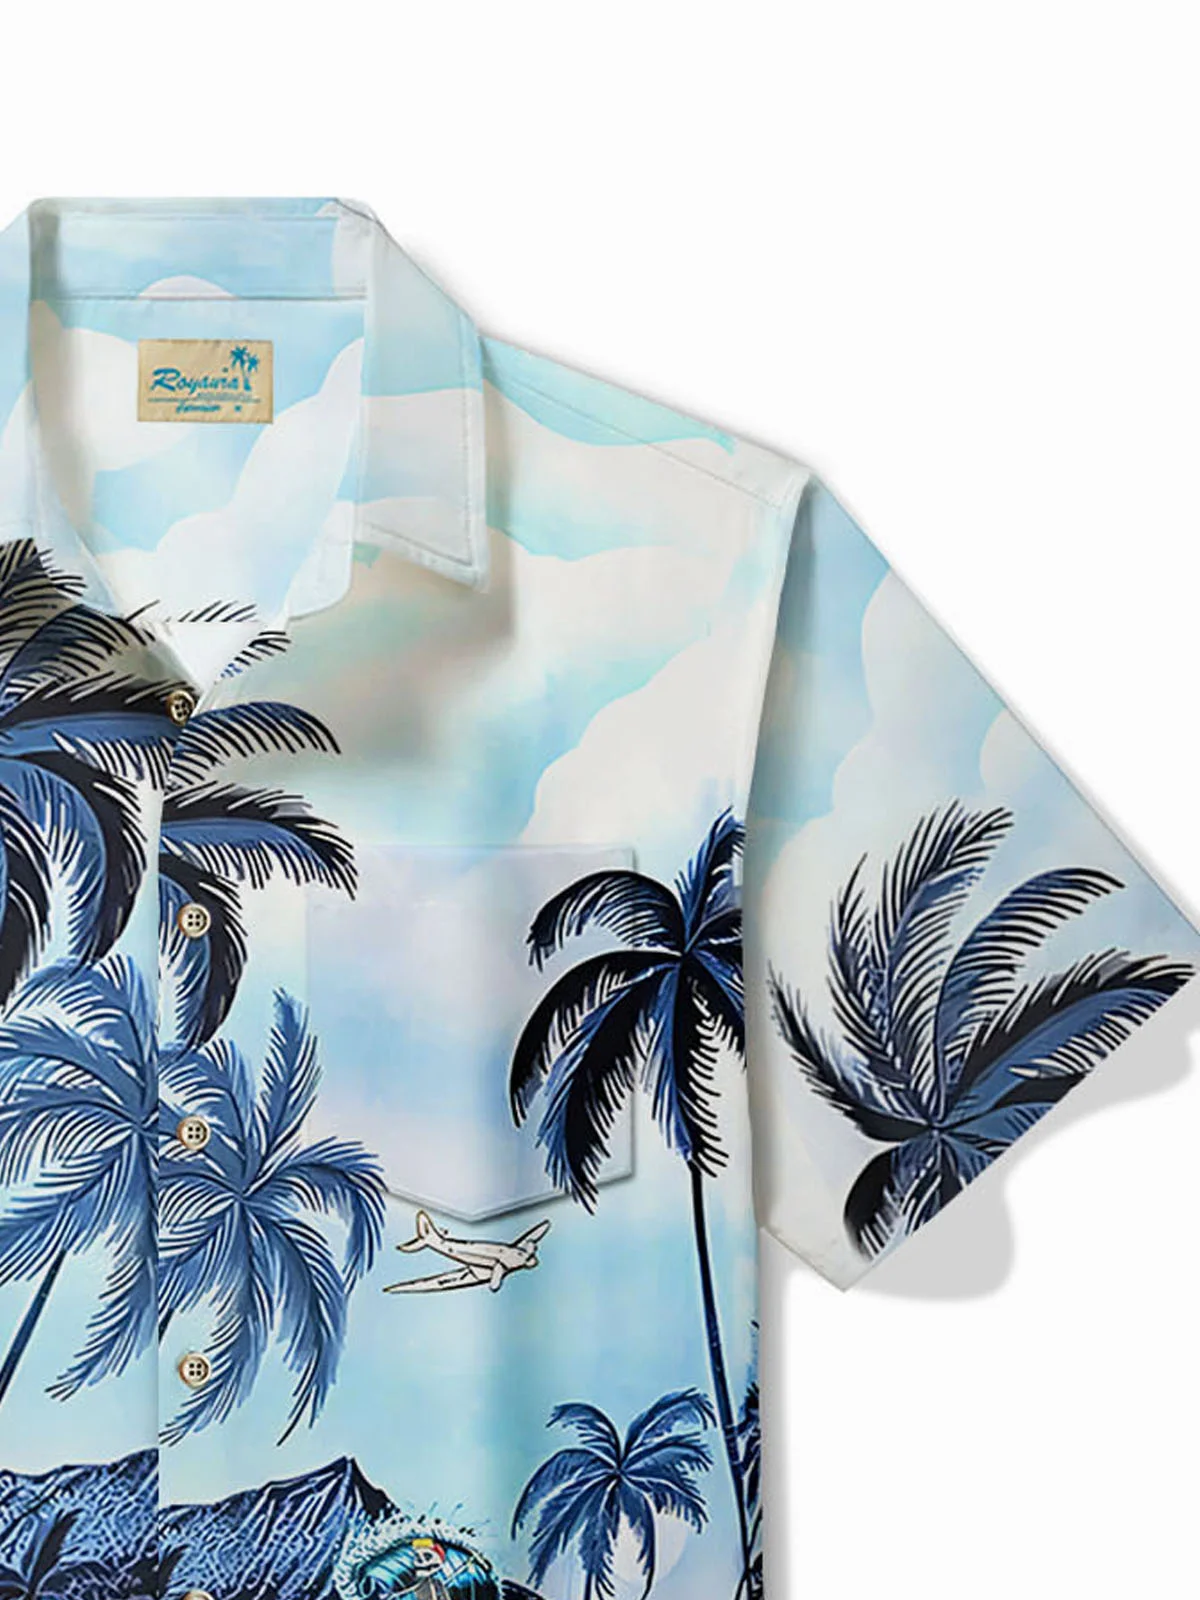 Royaura®Hawaiian Coconut Tree Print Men's Button Pocket Short Sleeve Shirt